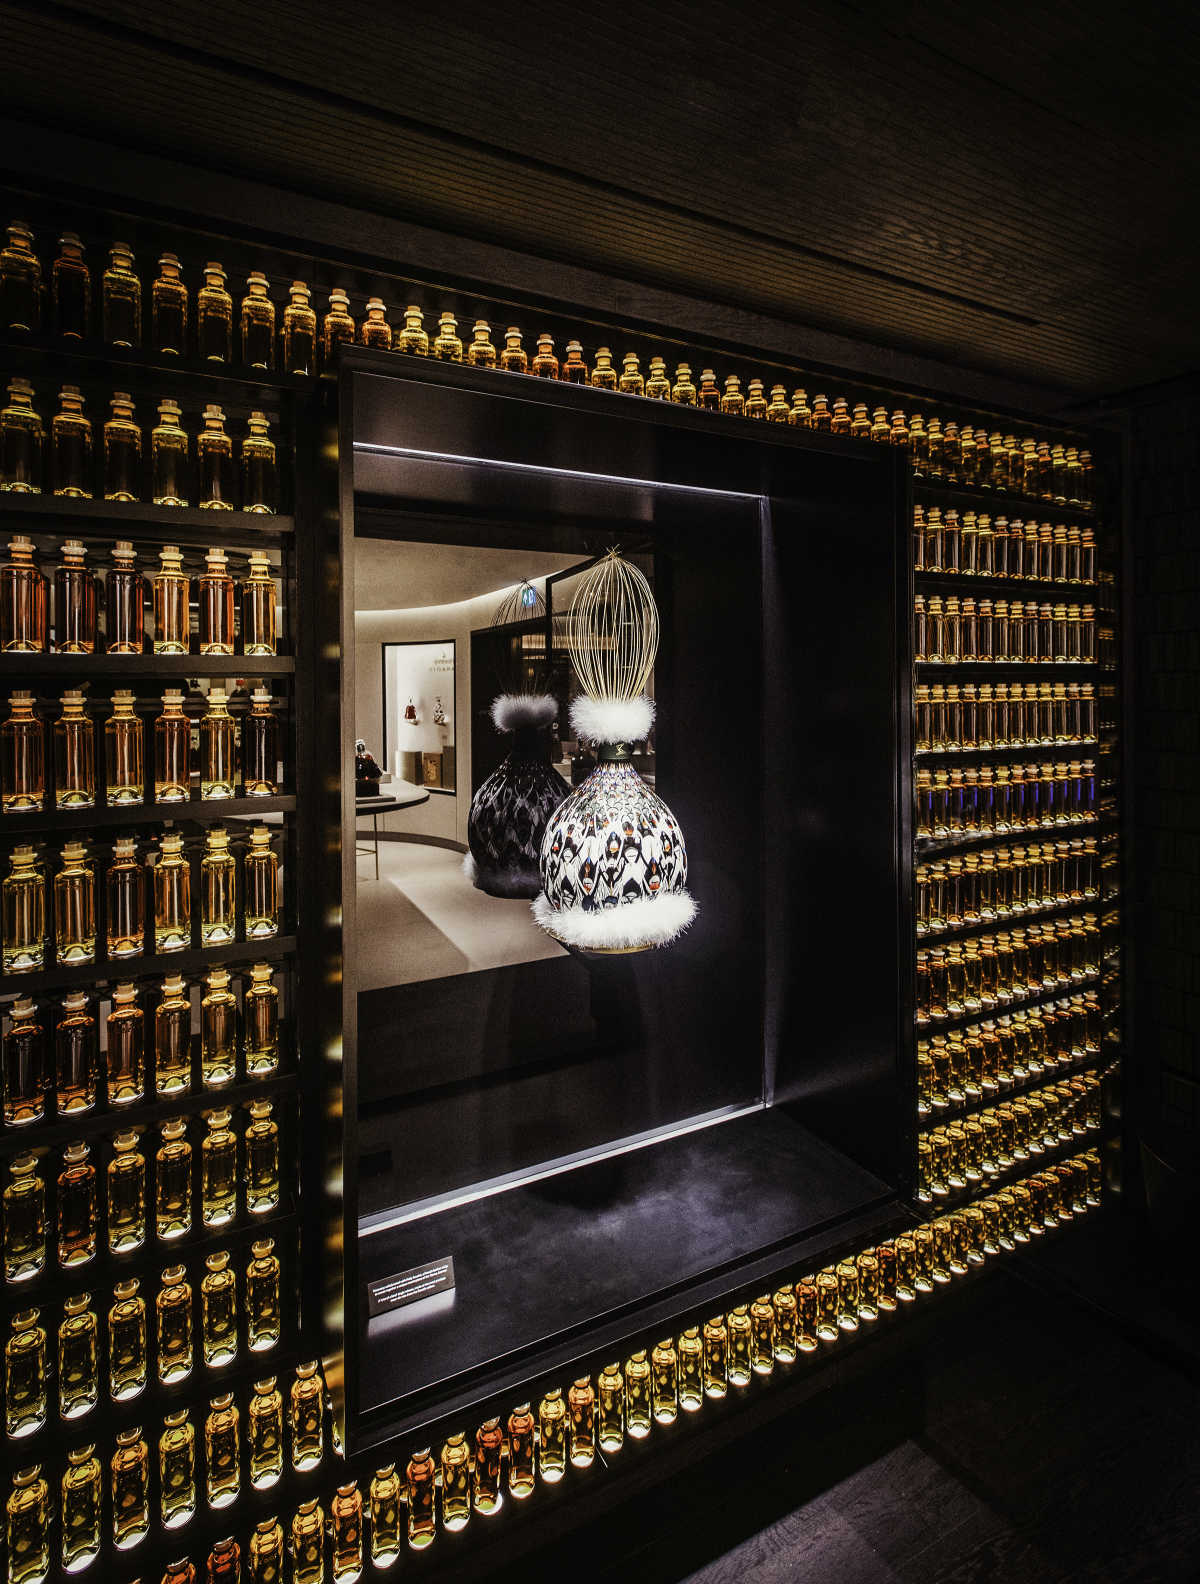 Hennessy boutique at Harrods | L'Observatoire International